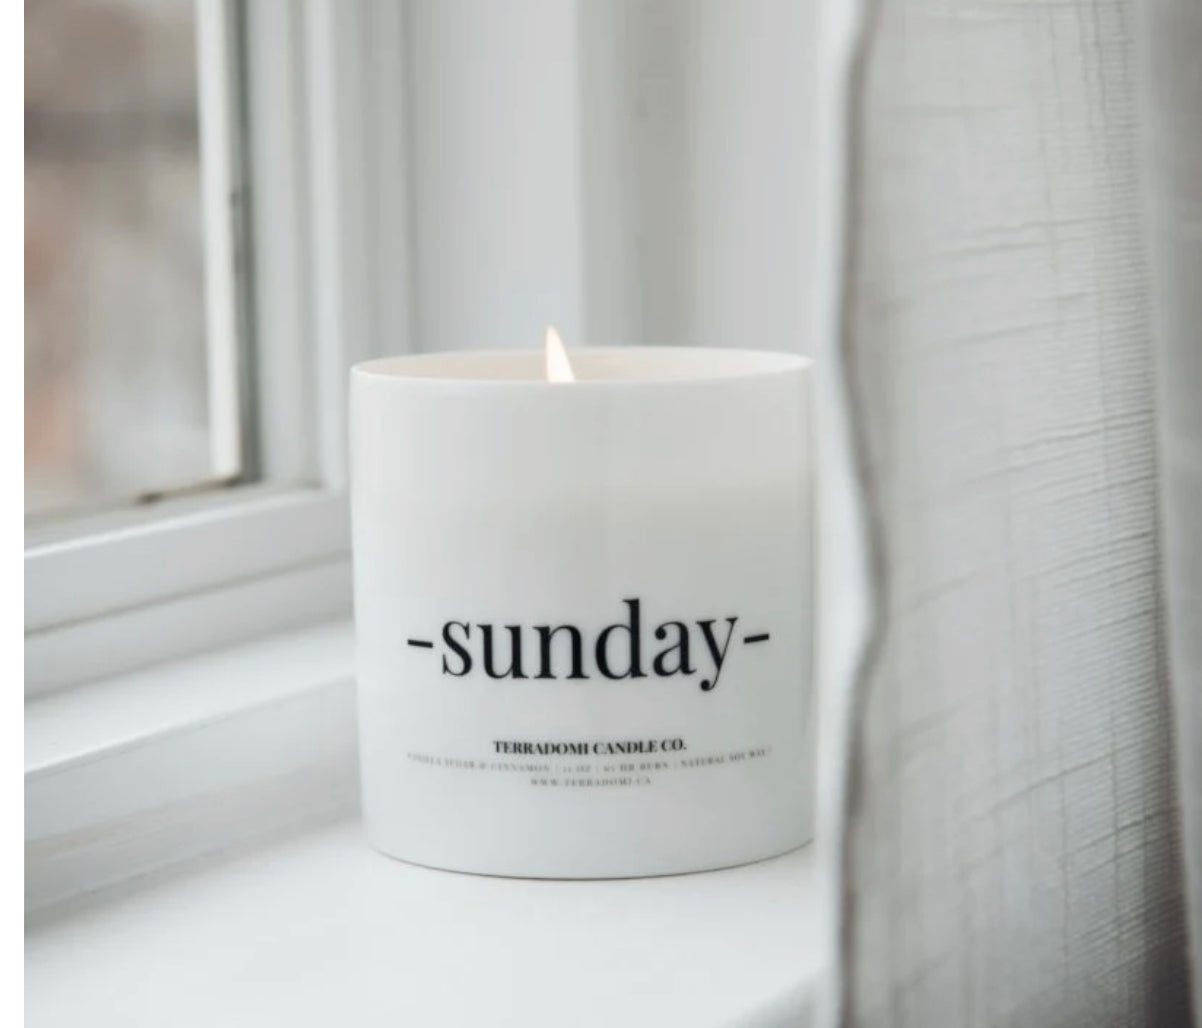 “Sunday” candle - Vanilla sugar and cinnamon by Terradomi candle co.